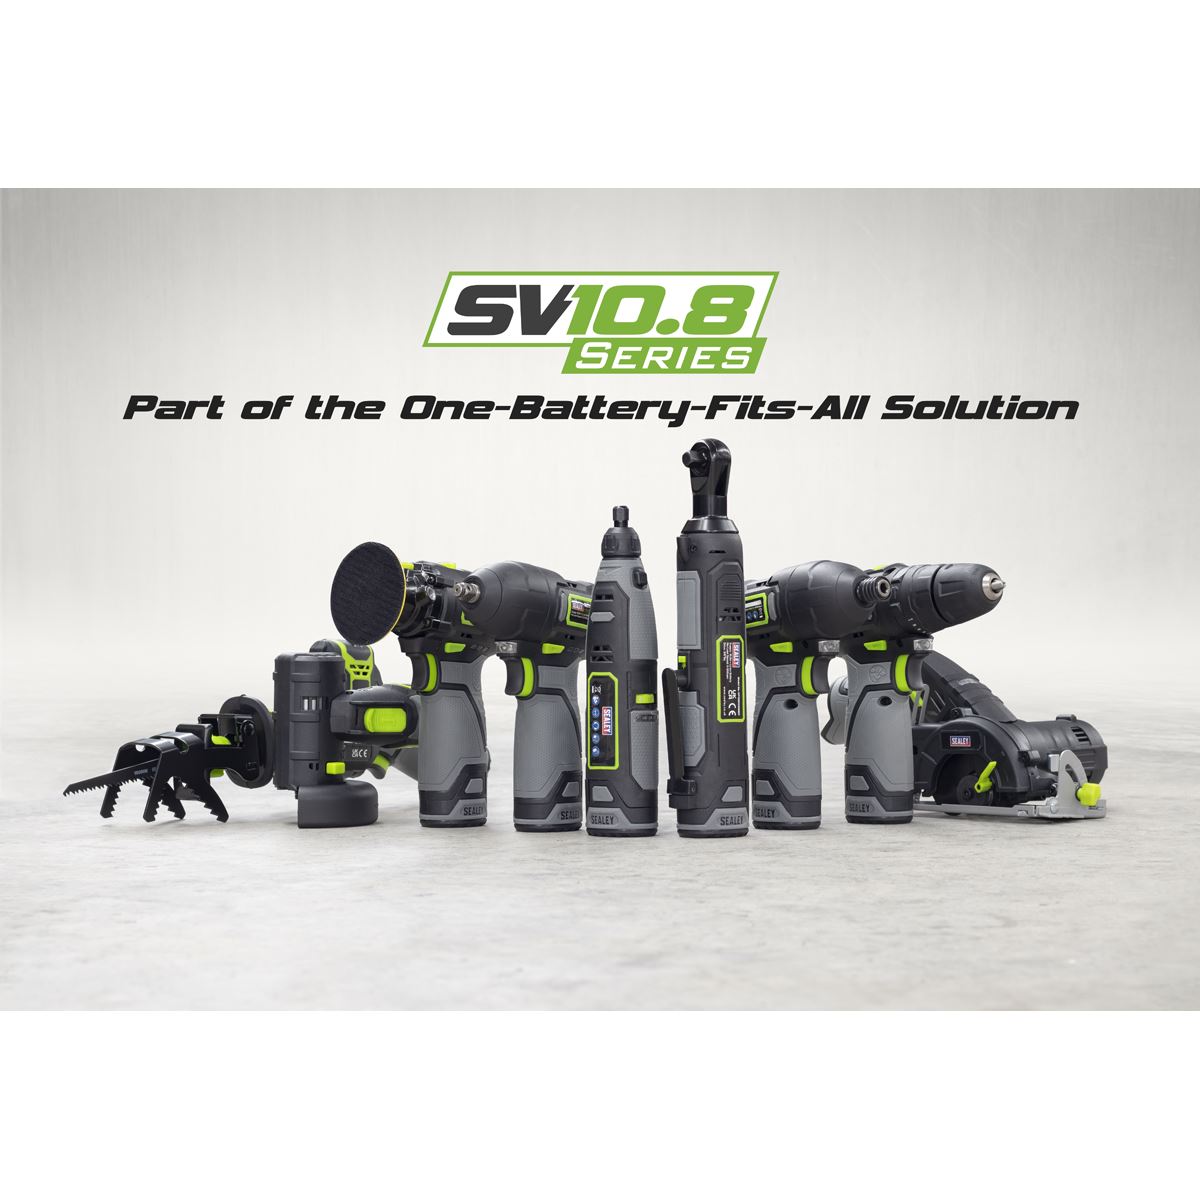 Sealey 2 x 10.8V SV10.8 Series Combi Drill & Multi-Tool Kit